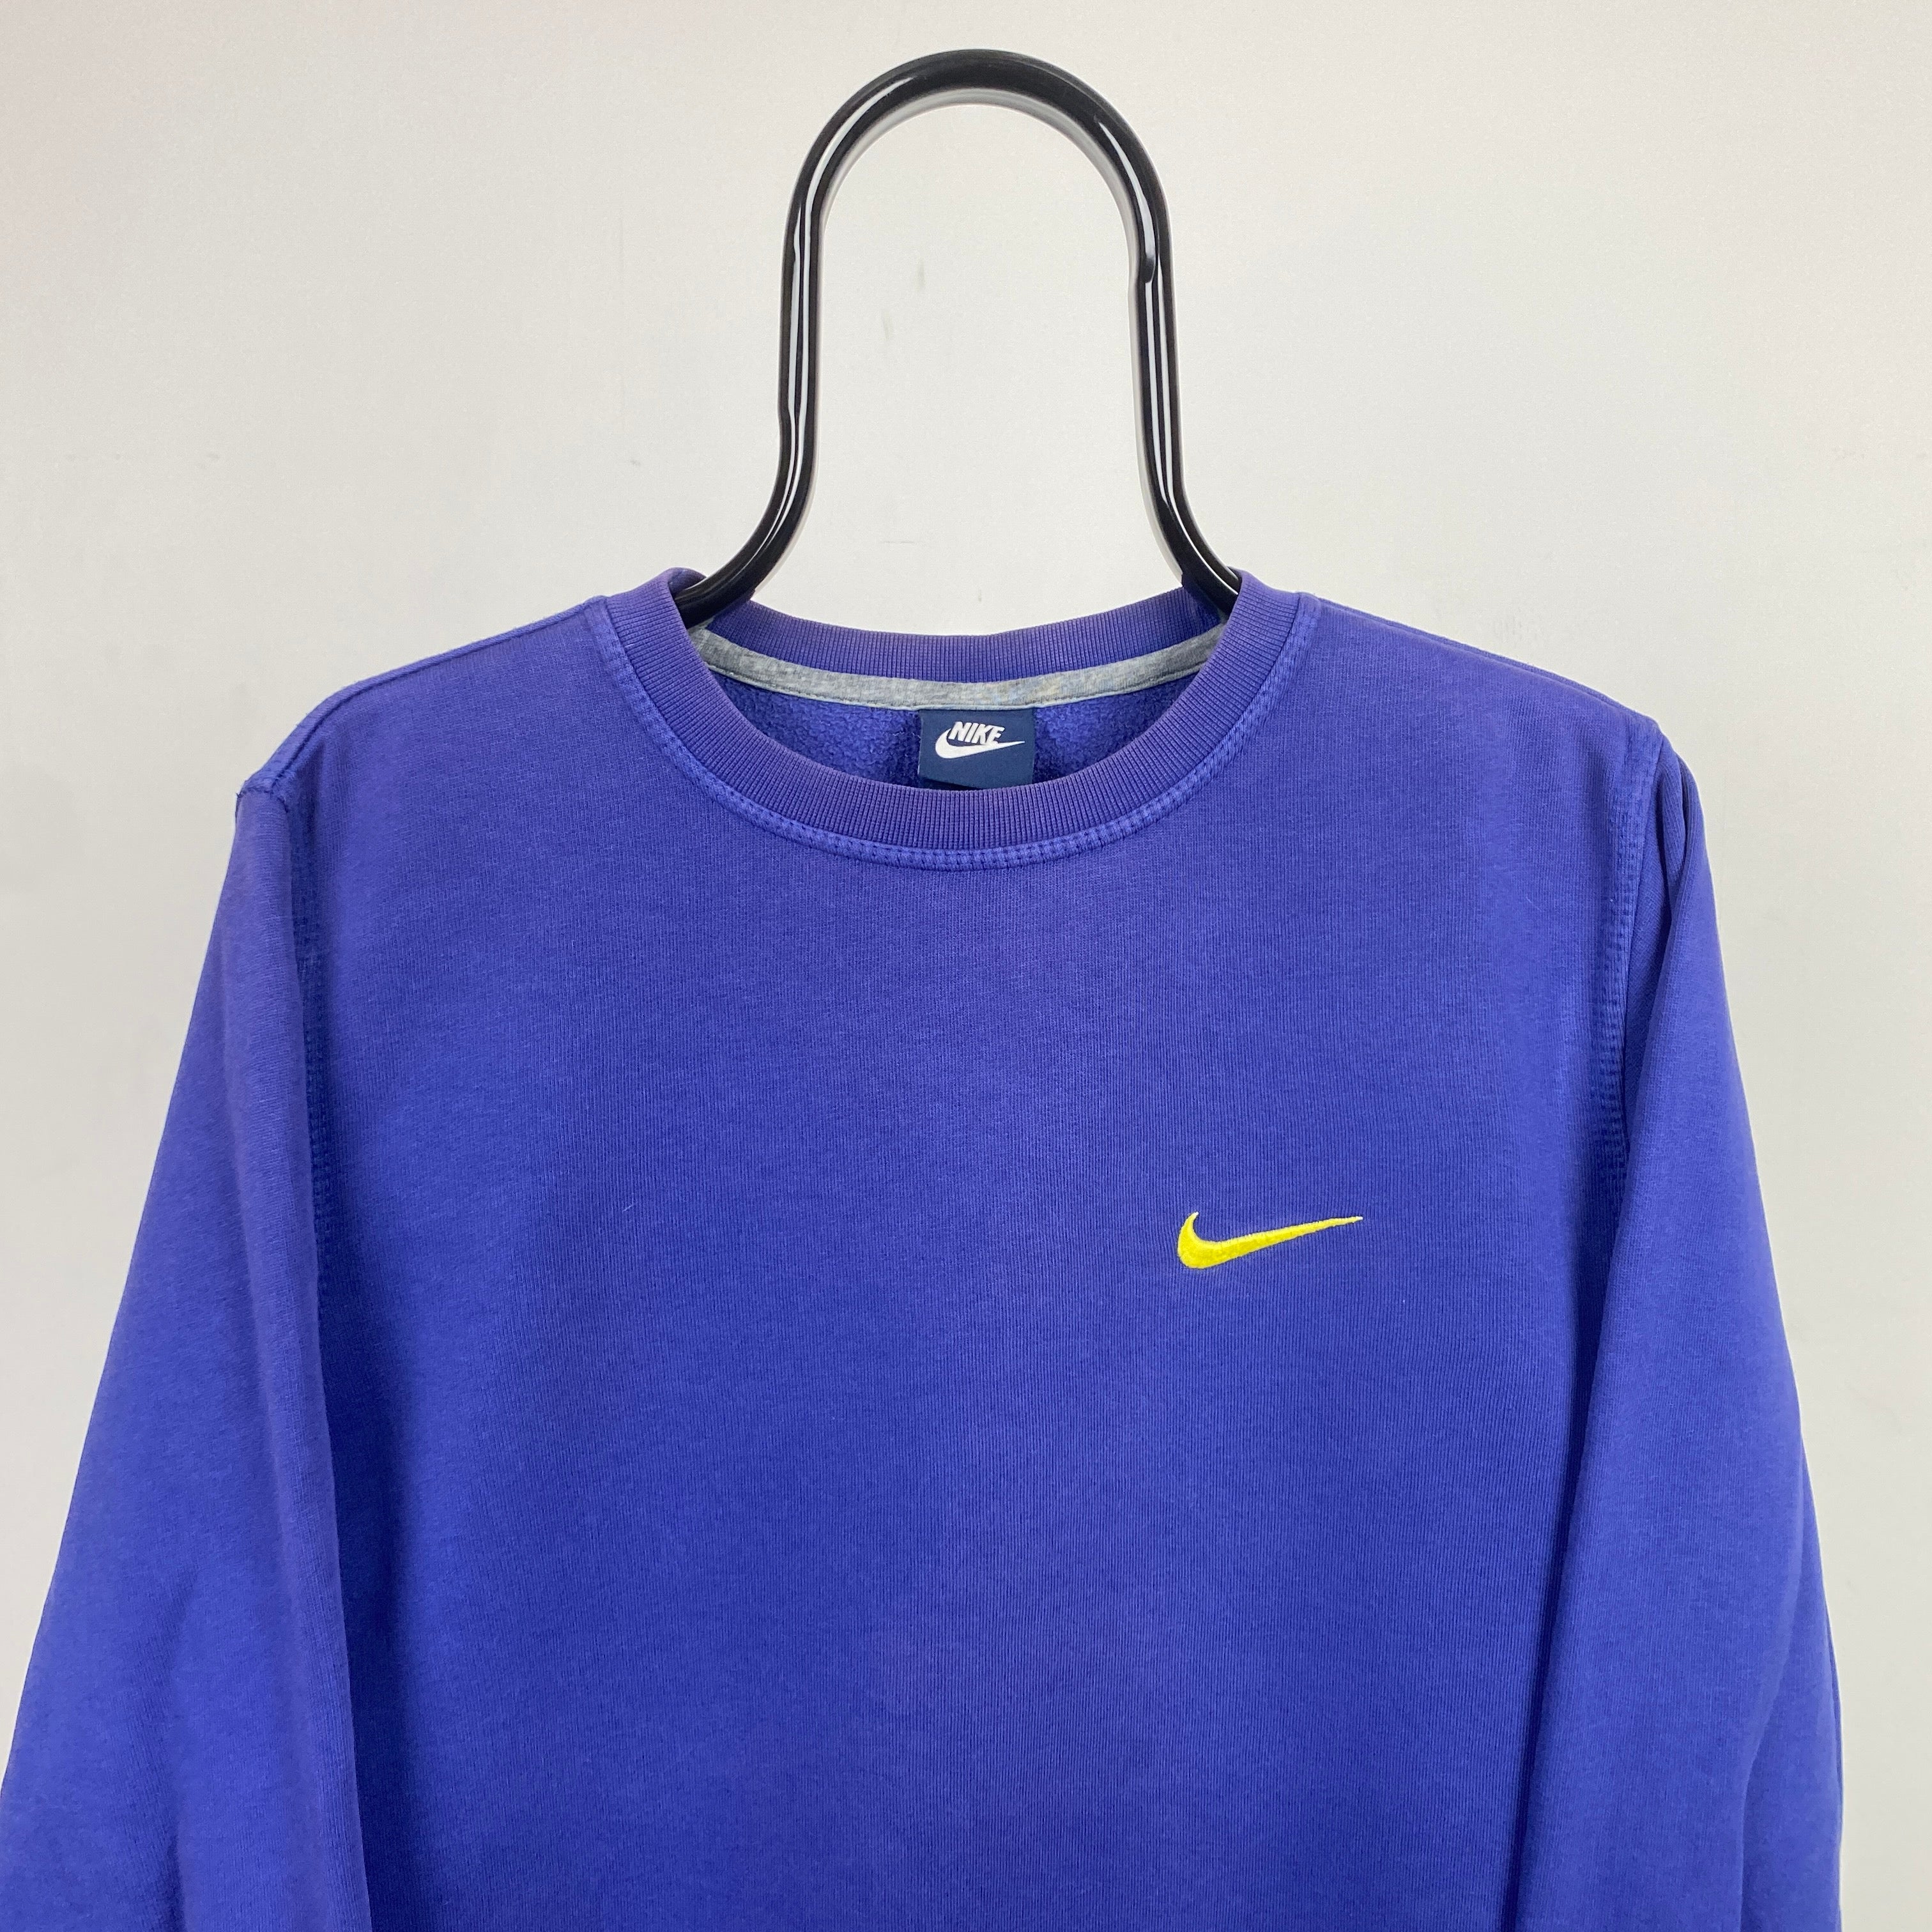 00s Nike Sweatshirt Purple Small